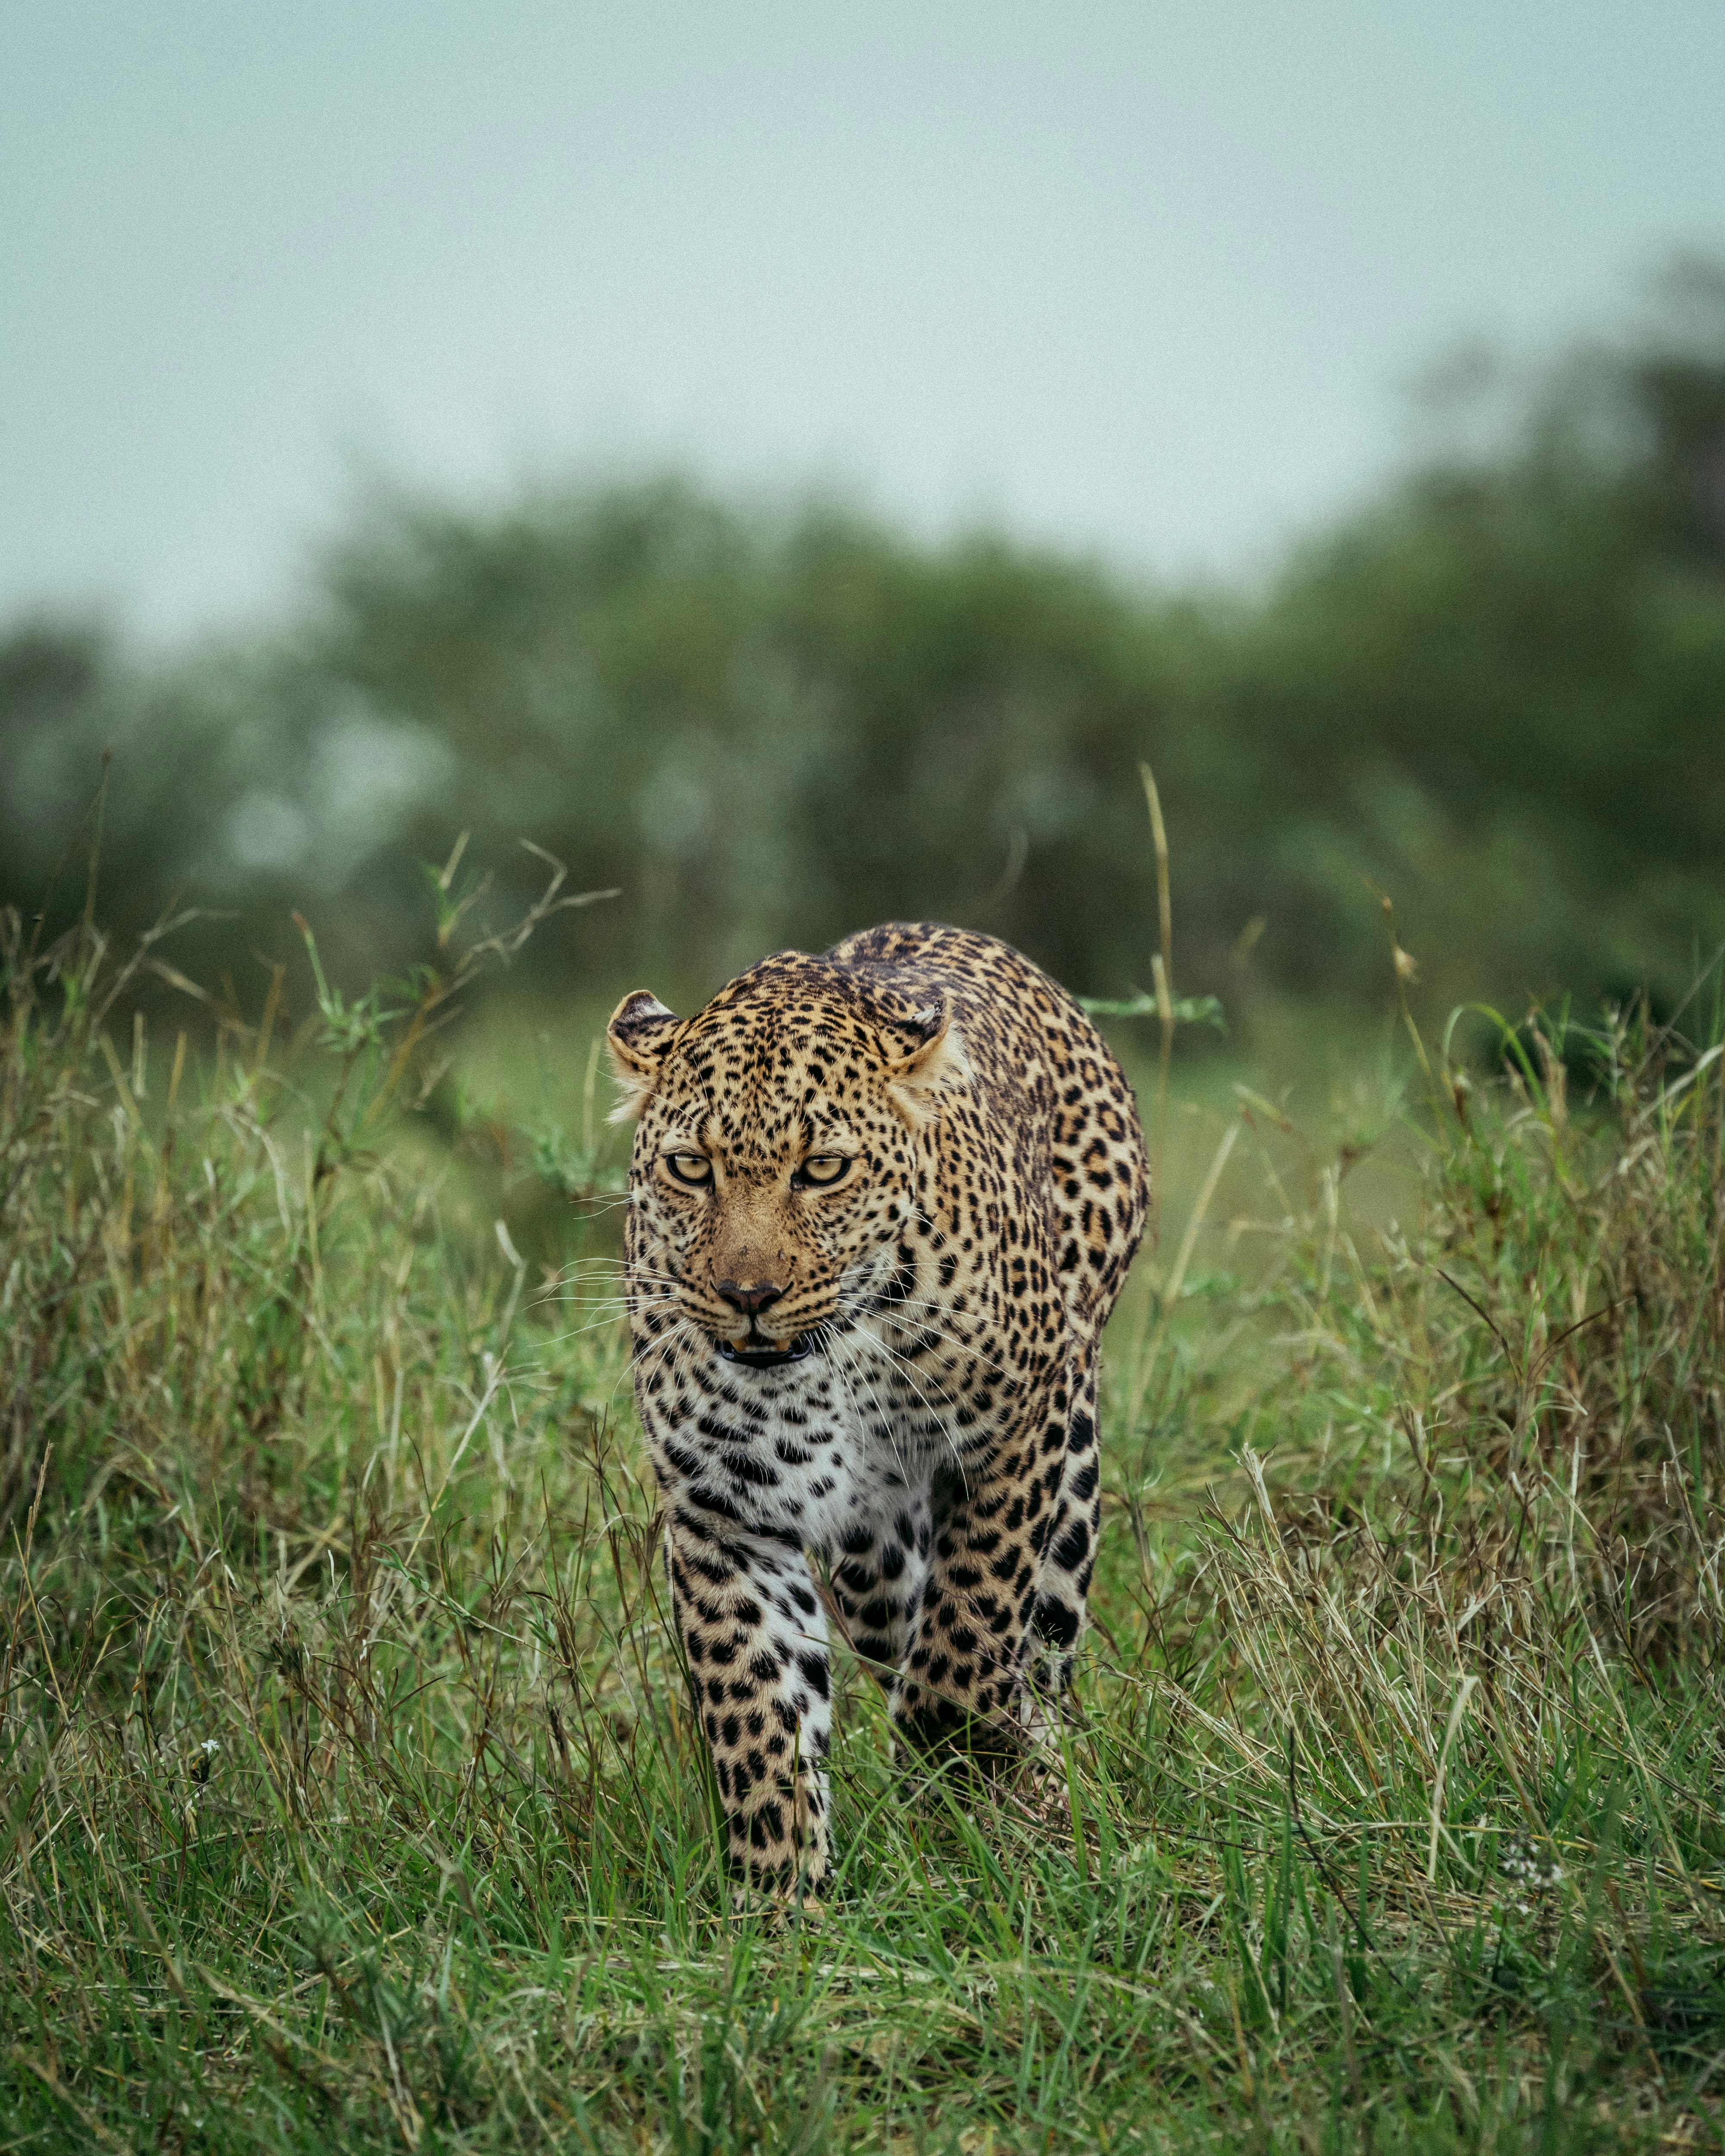 leopard walking on green grass field during daytime